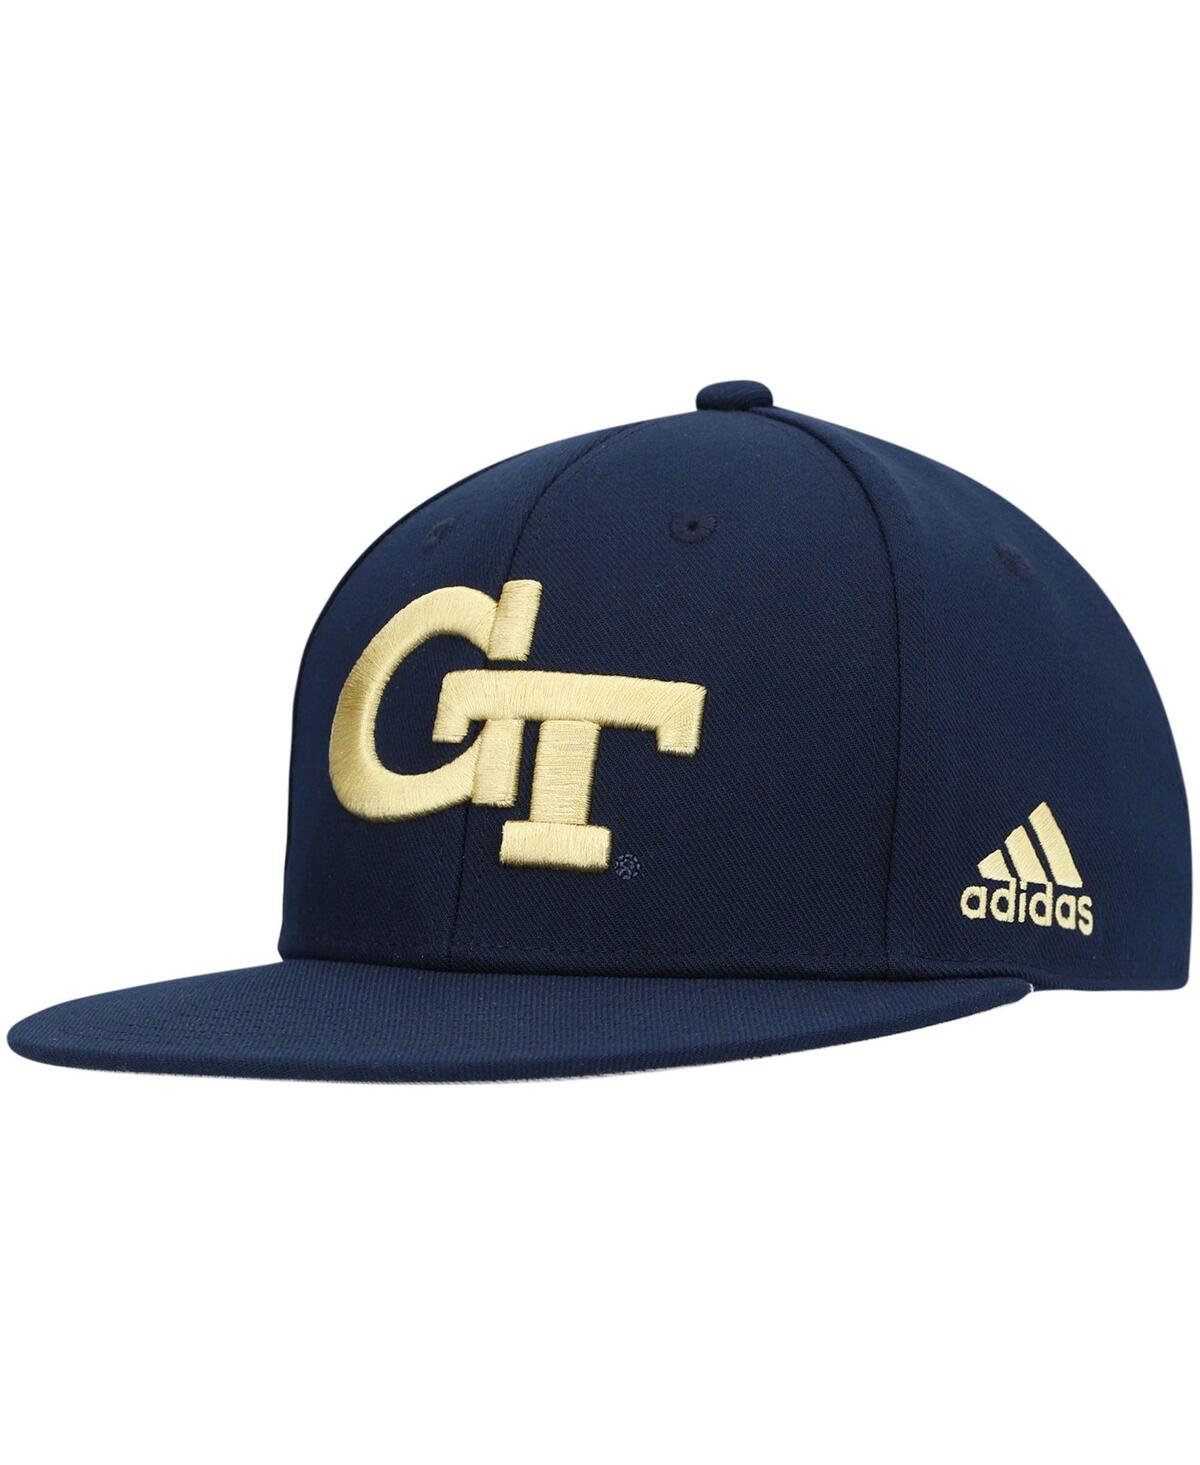 Shop Adidas Originals Men's Adidas Navy Georgia Tech Yellow Jackets Team On-field Baseball Fitted Hat